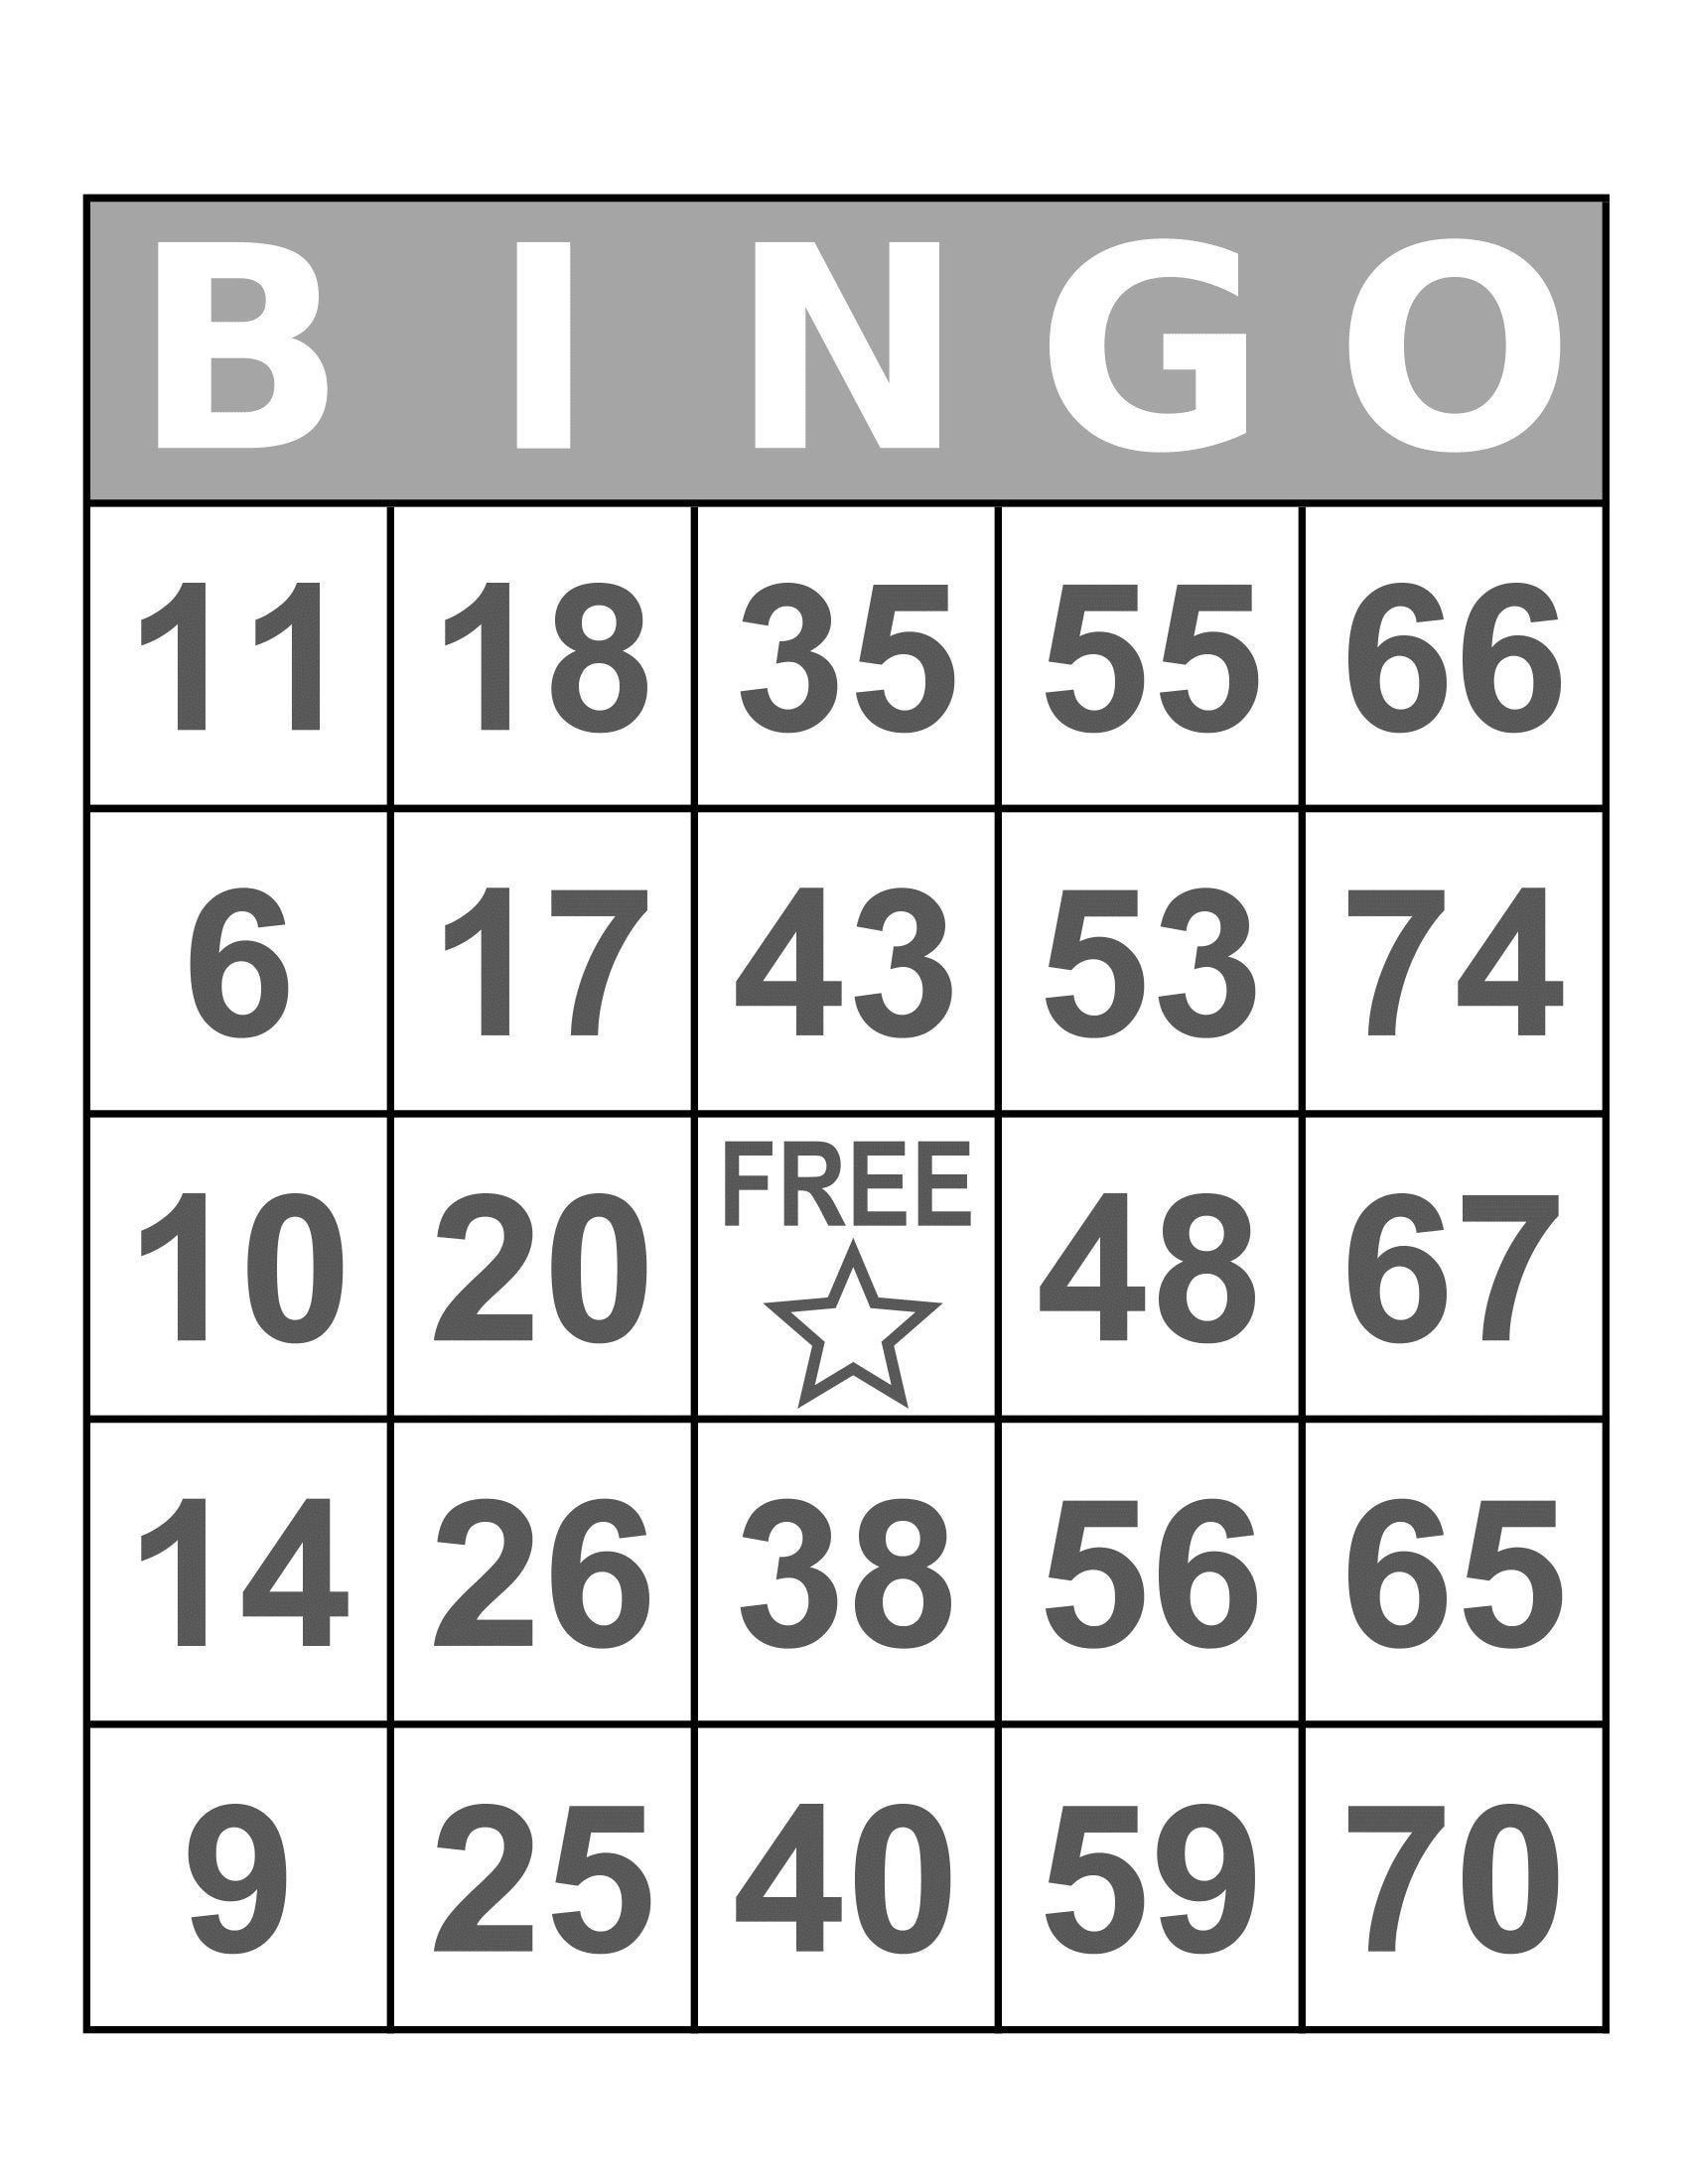 bingo-caller-card-template-mainalfa